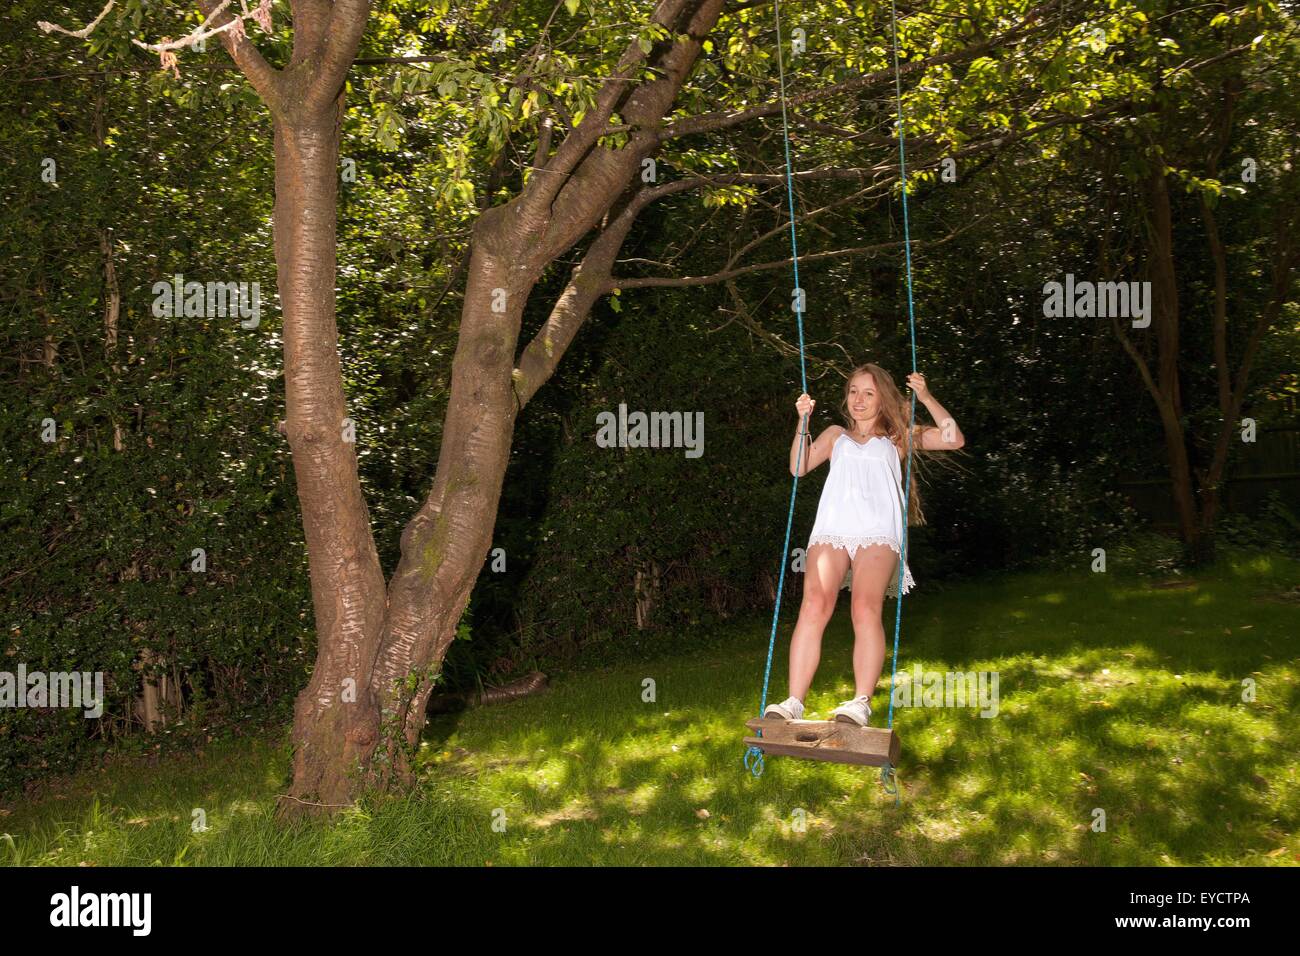 Teenage girl swinging on tree swing Stock Photo